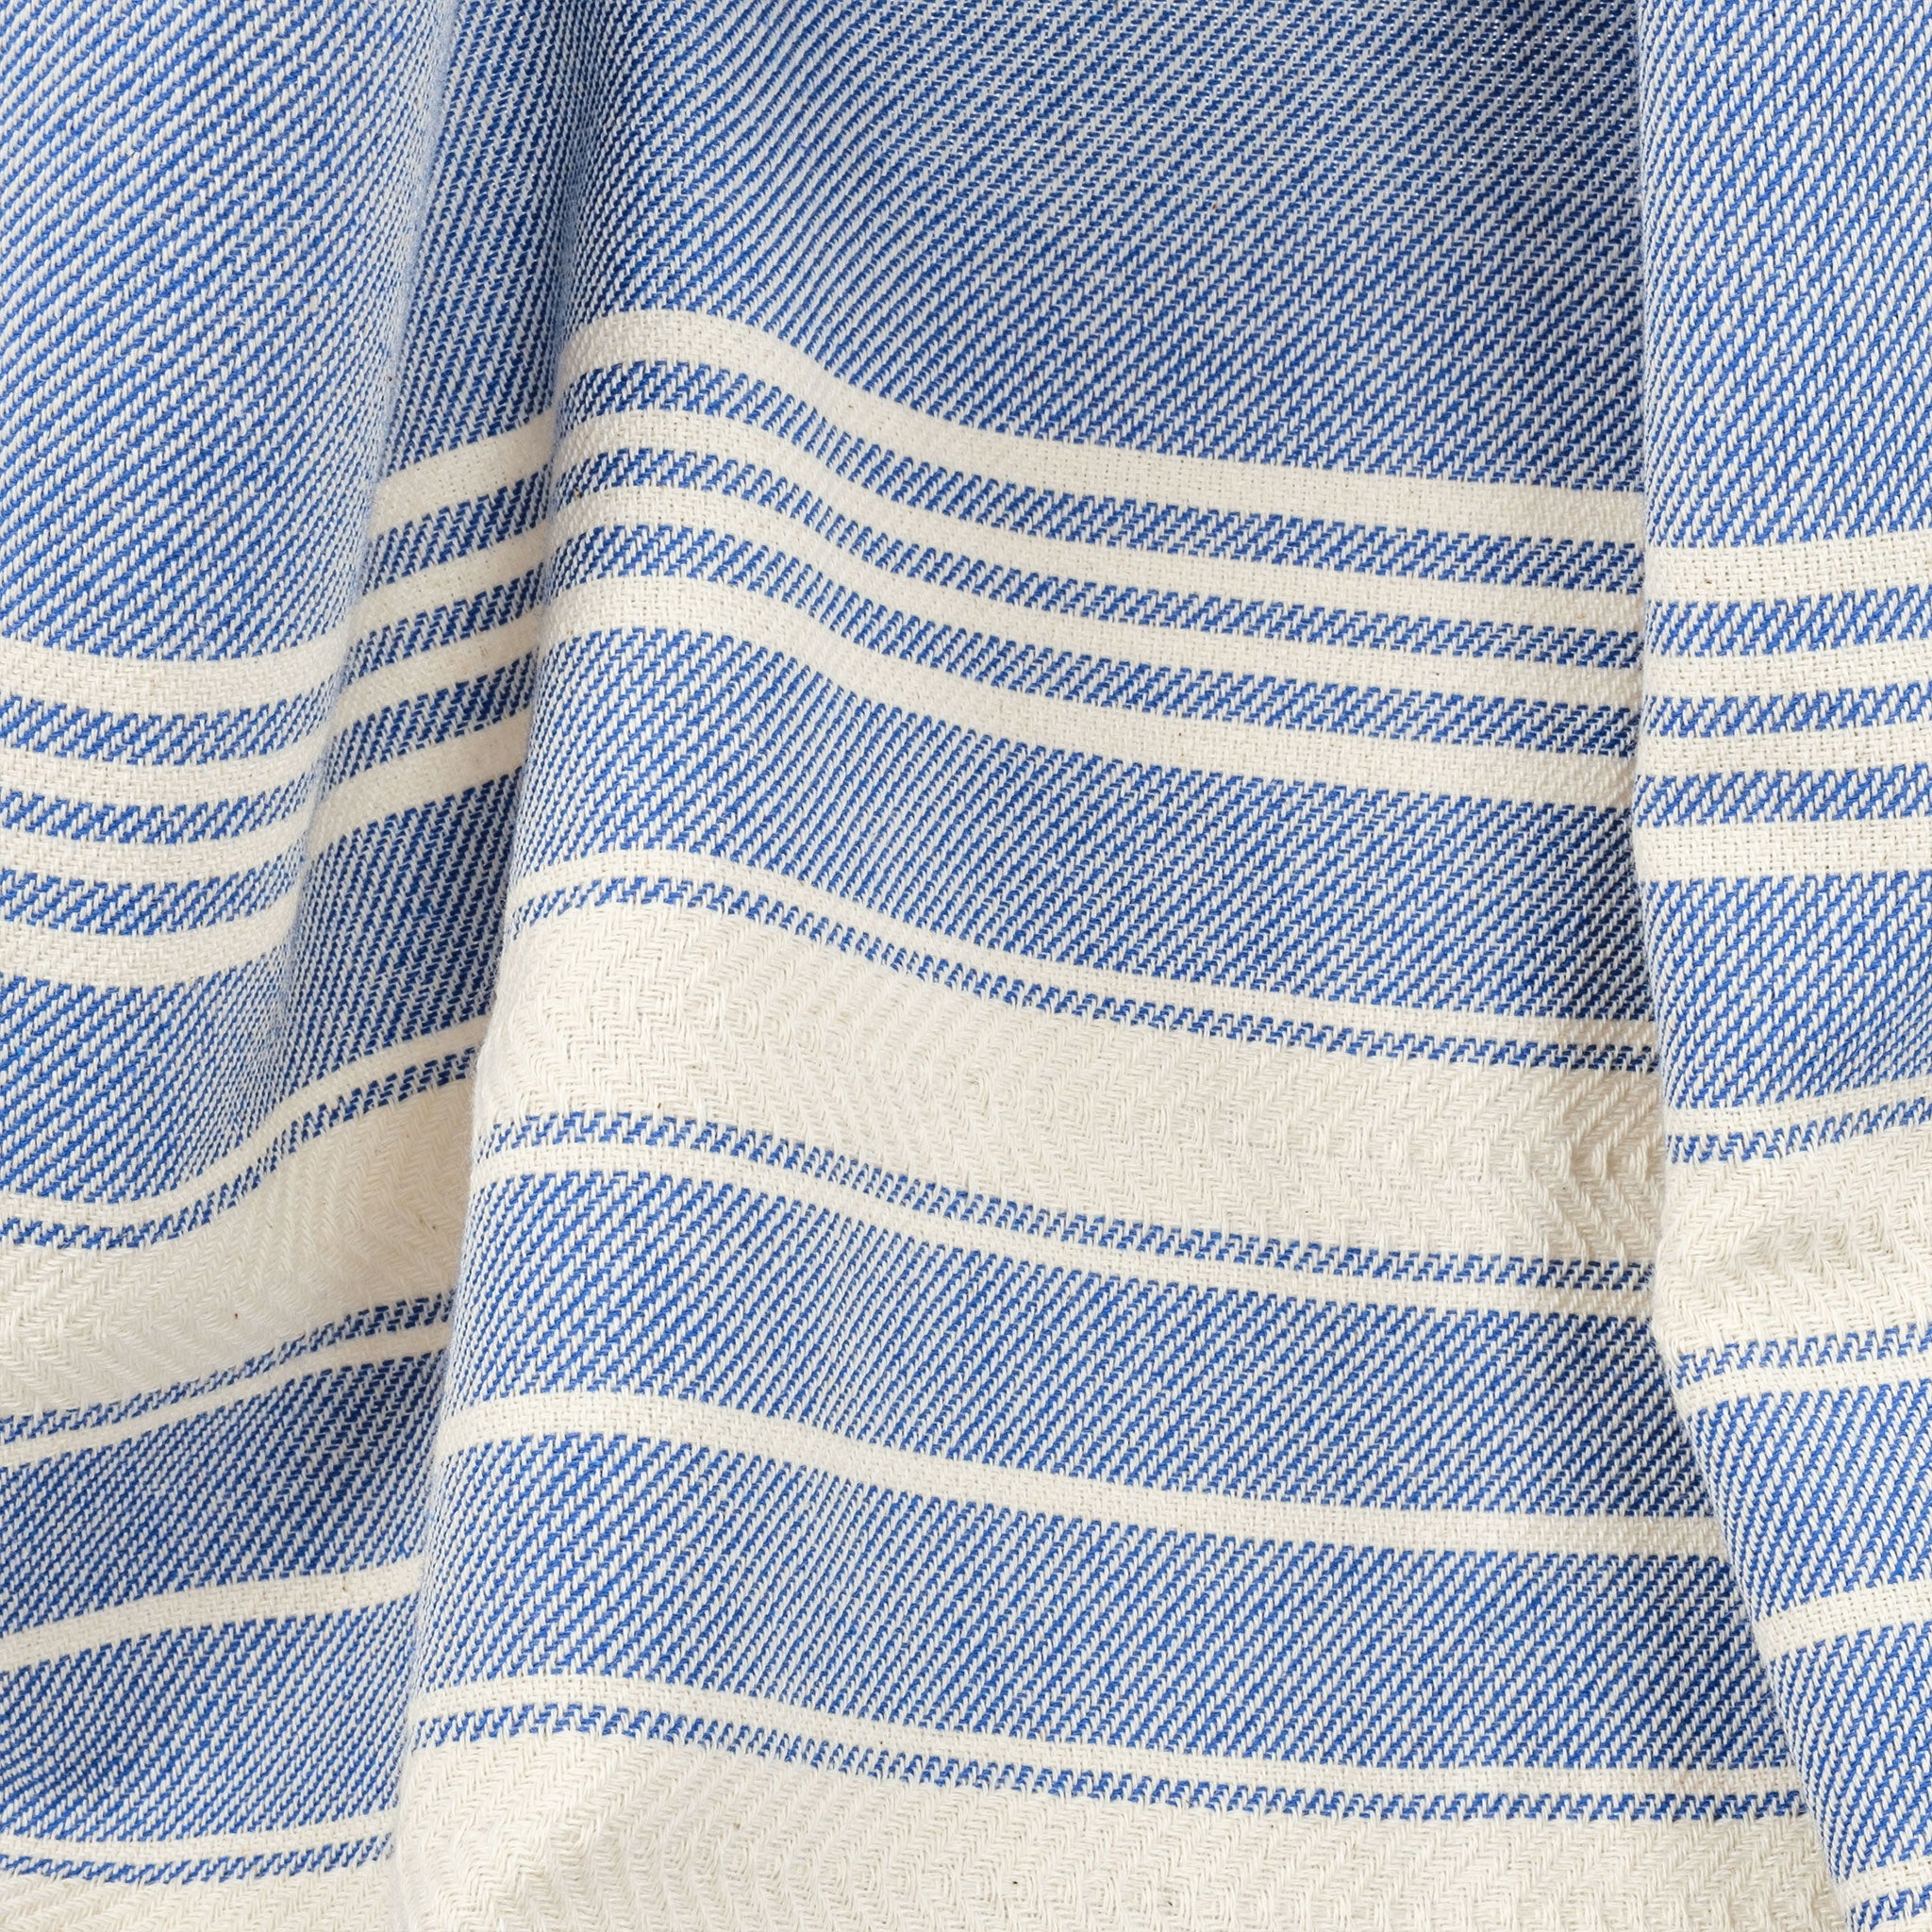 American Soft Linen - 100% Cotton Turkish Peshtemal Towels - 44 Set Case Pack - Blue - 2